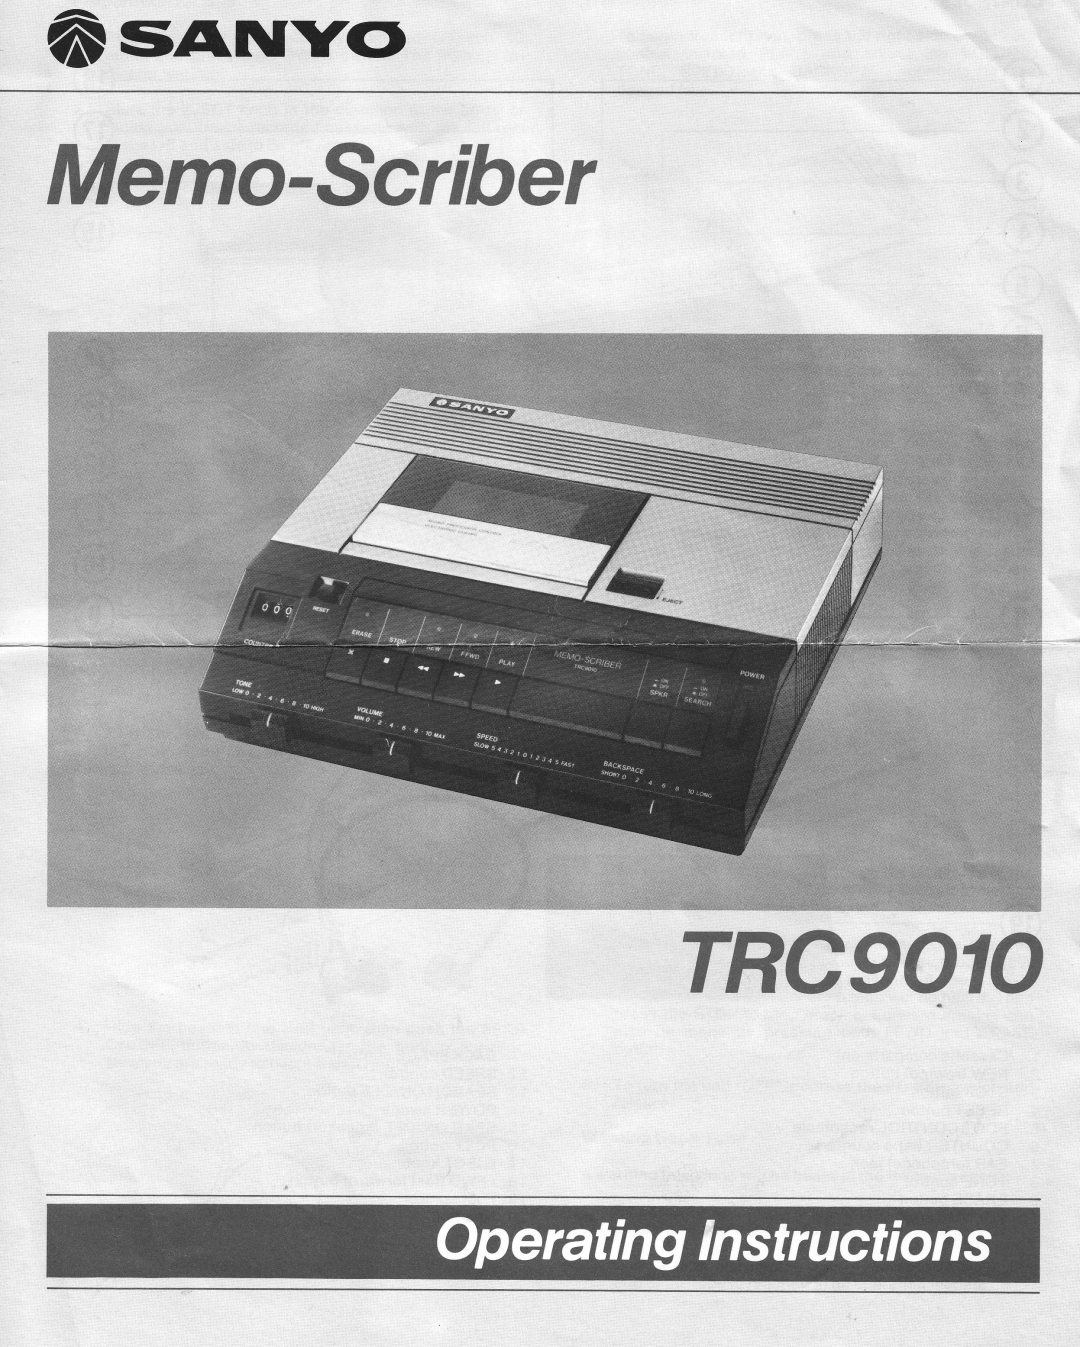 Sanyo TRC9010 manual Memo-Scriber, TRCgOtO, 6sANYo 